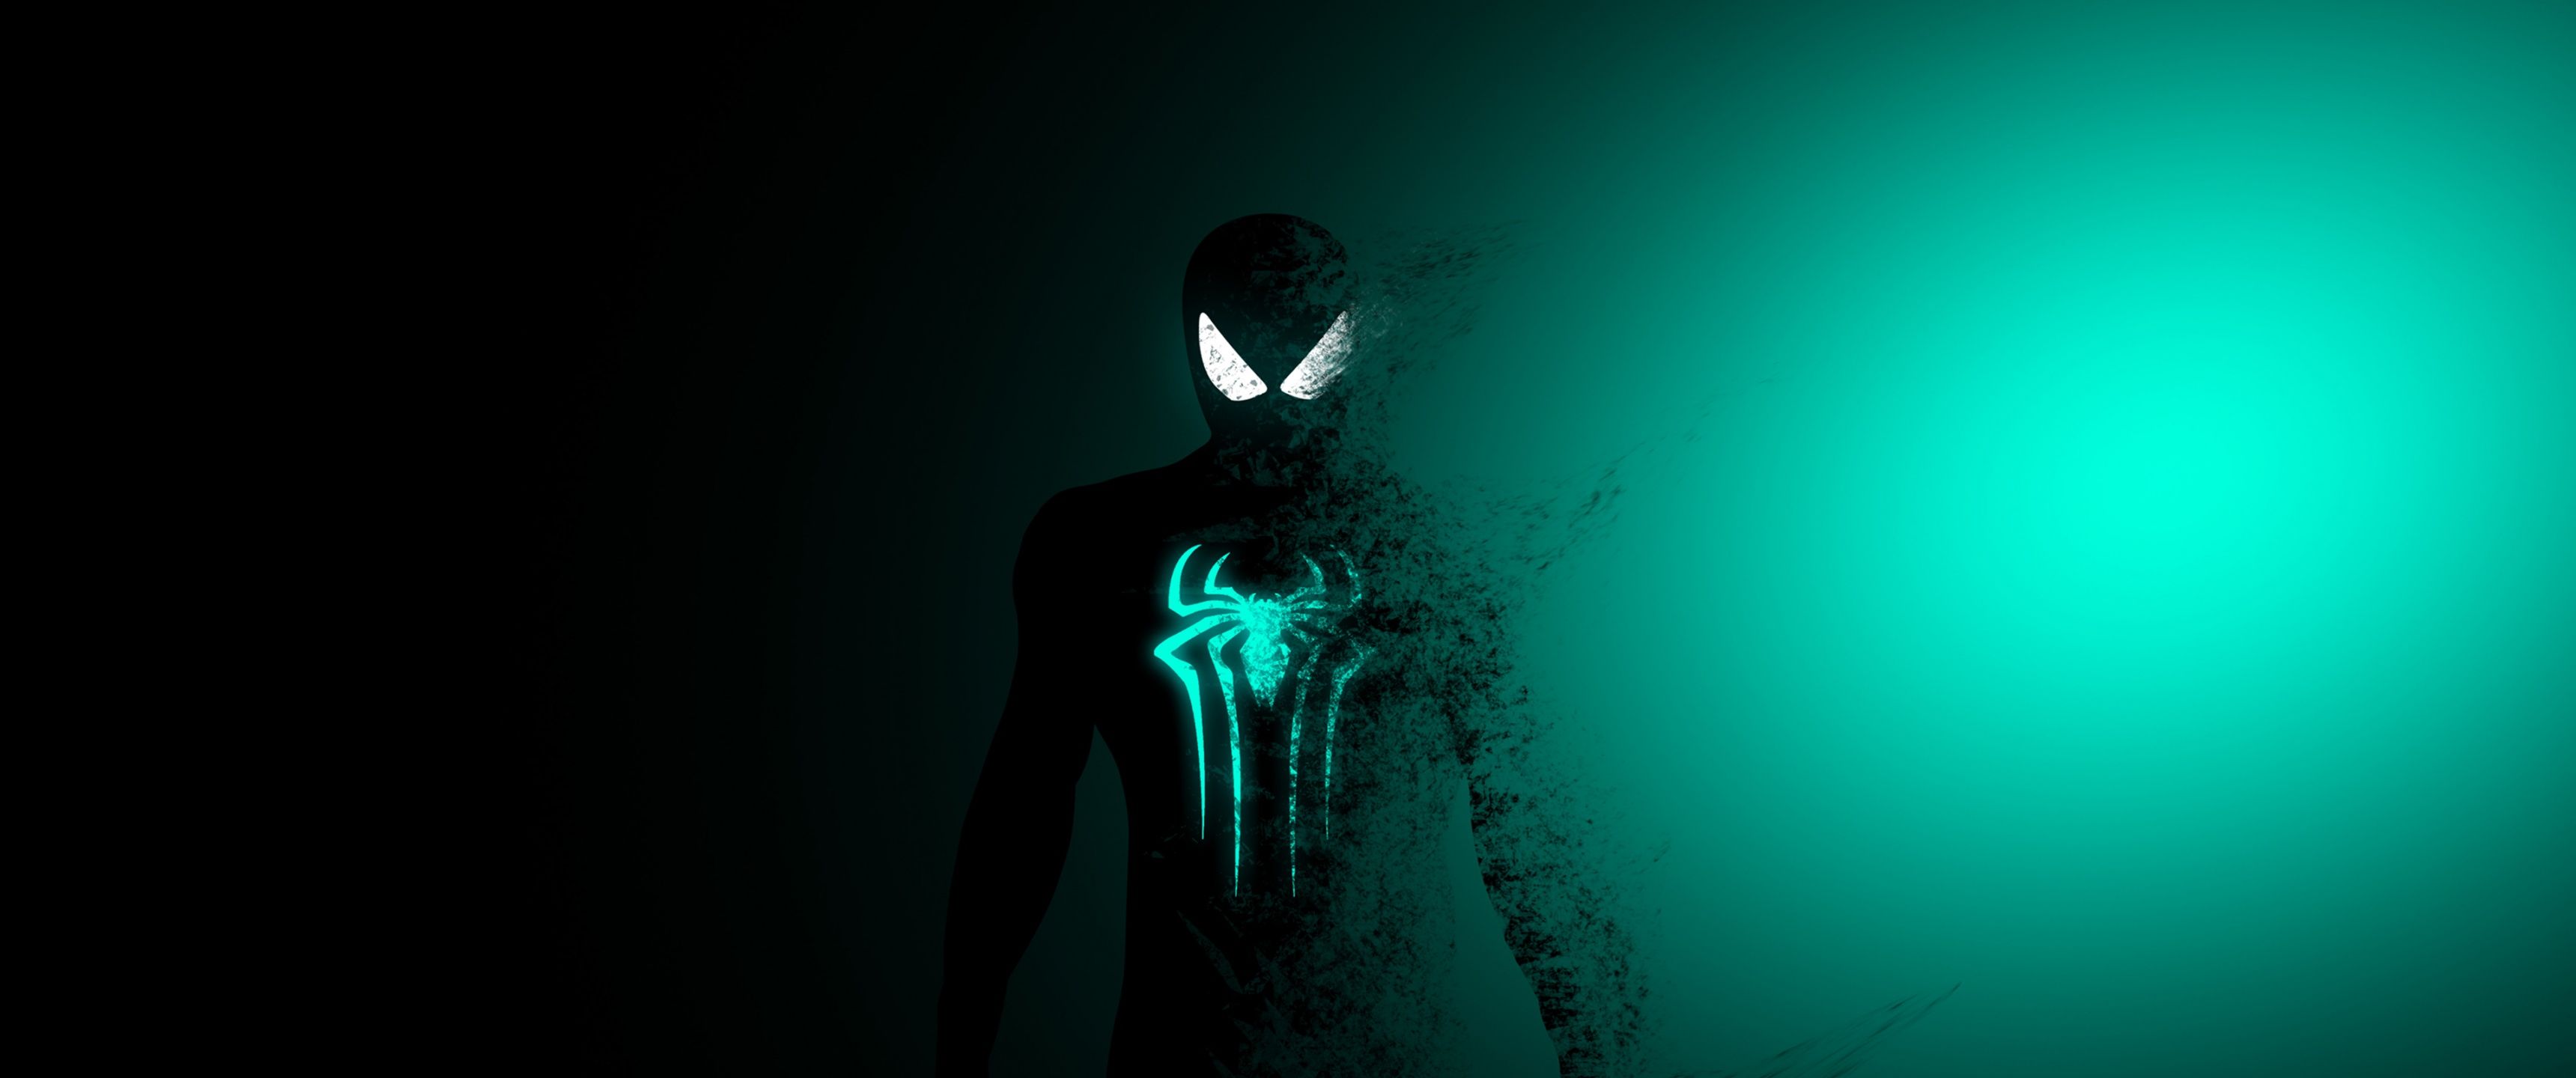 Spiderman, Superheroes, Artwork, Green, Black, Silhouette, 4K, 3840x2160 wallpaper - Cyan